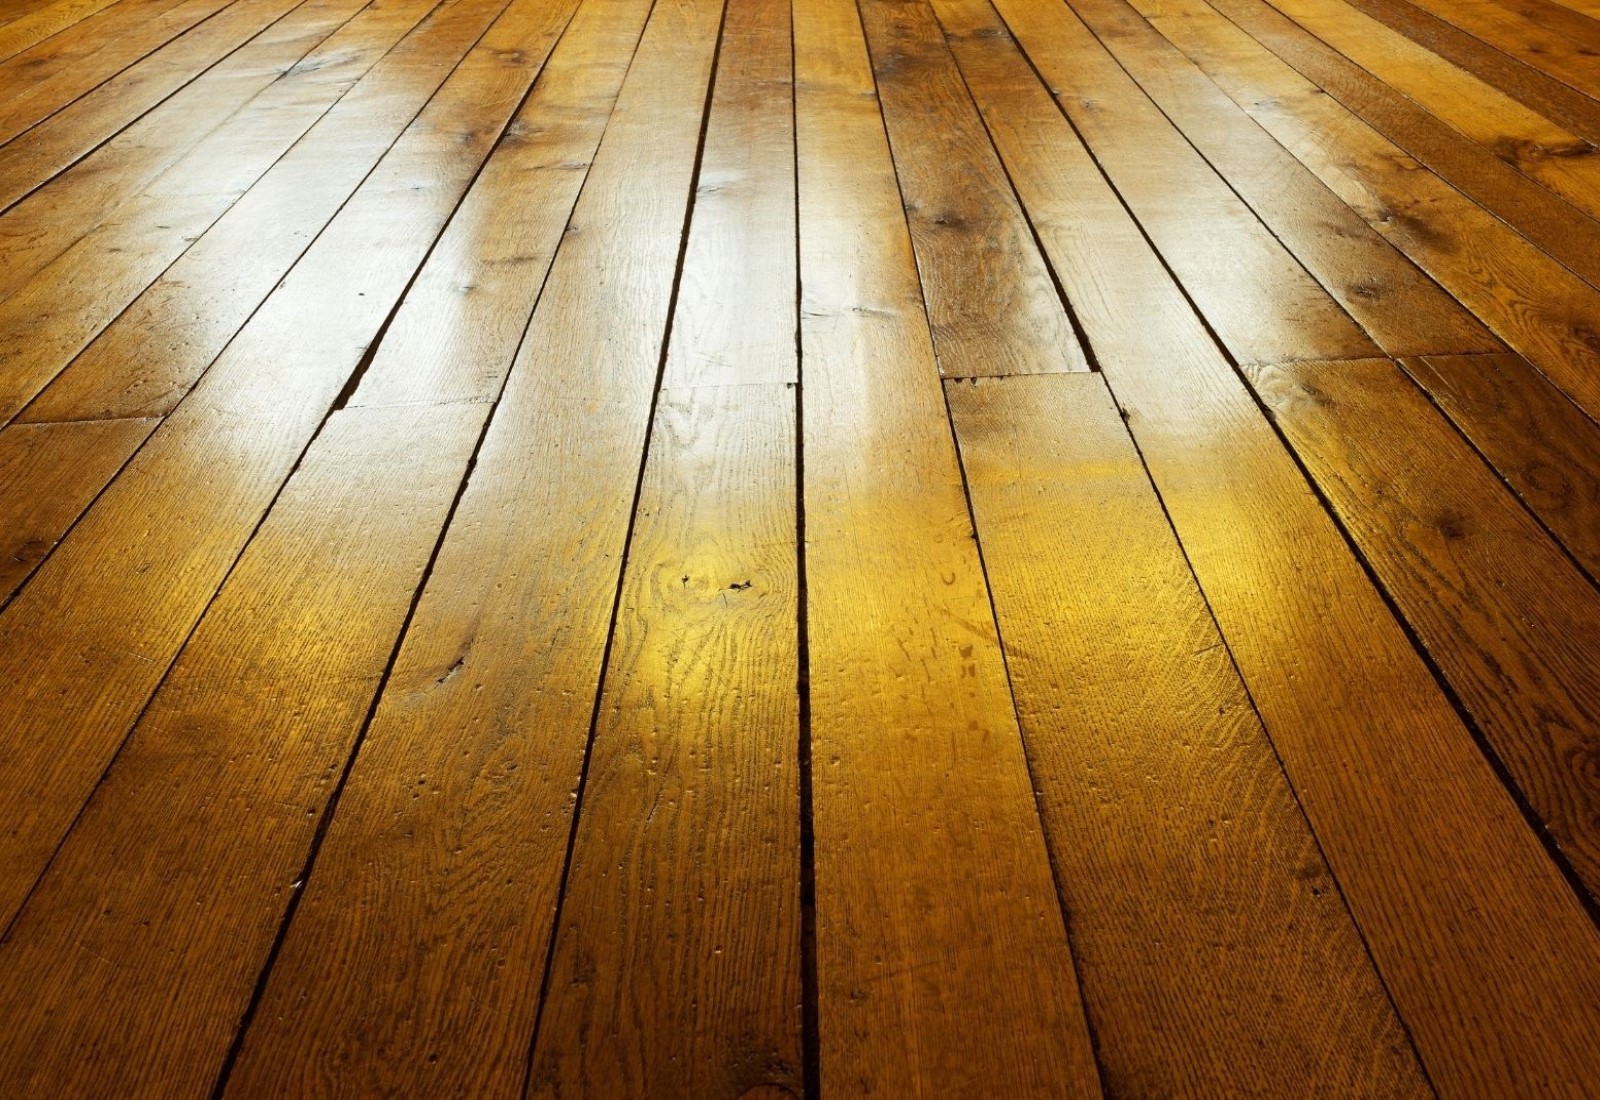 residential home floor wooden polishing sanding polished timber hardwood